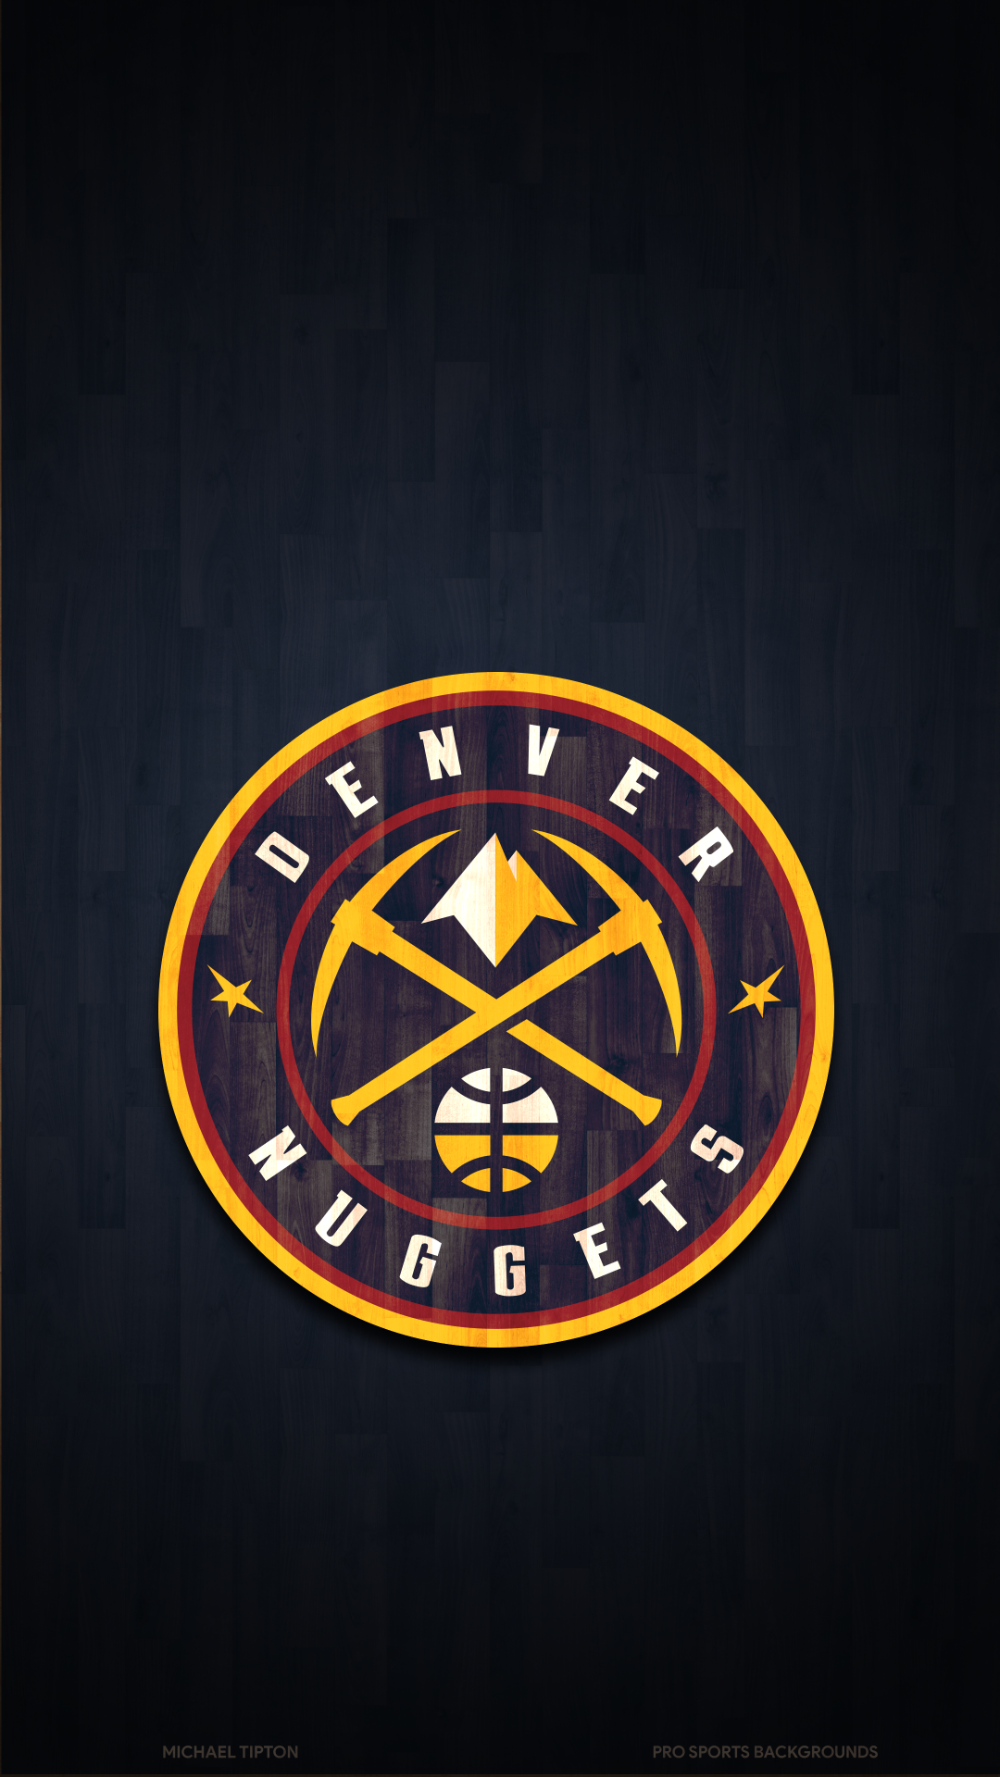 Denver nuggets wallpapers â pro sports backgrounds denver nuggets nba teams team wallpaper